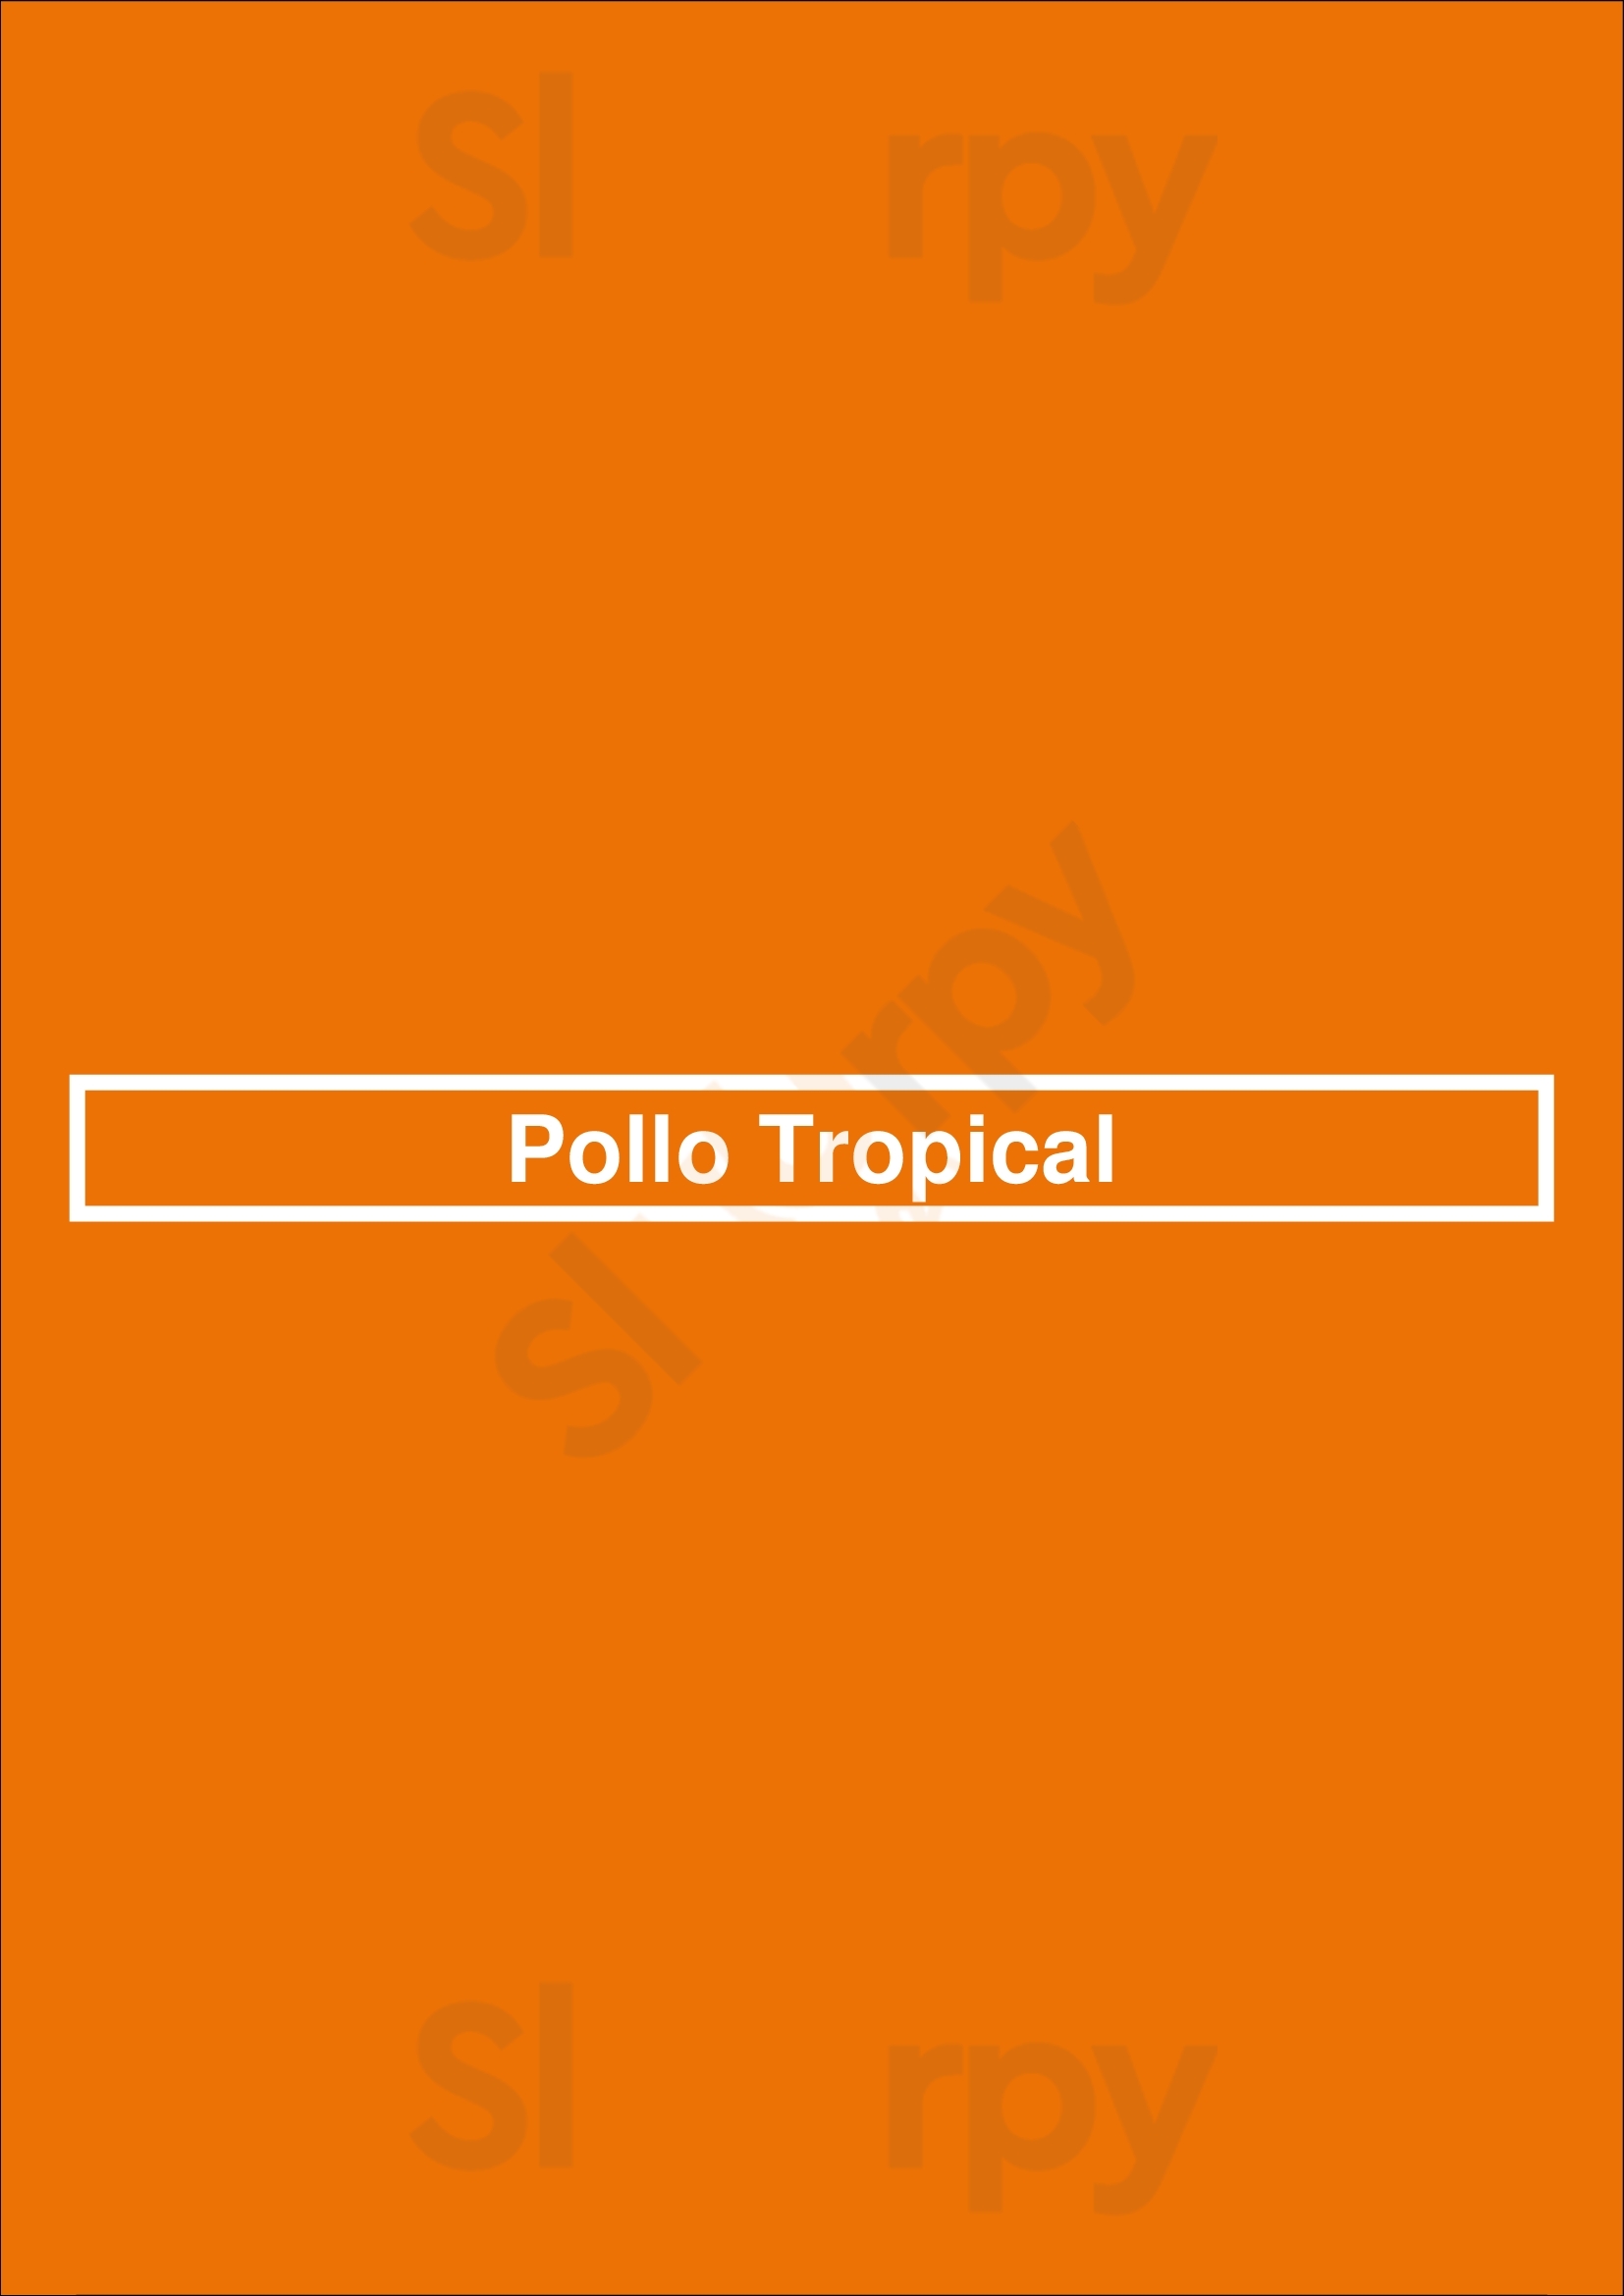 Pollo Tropical Lake Worth Menu - 1